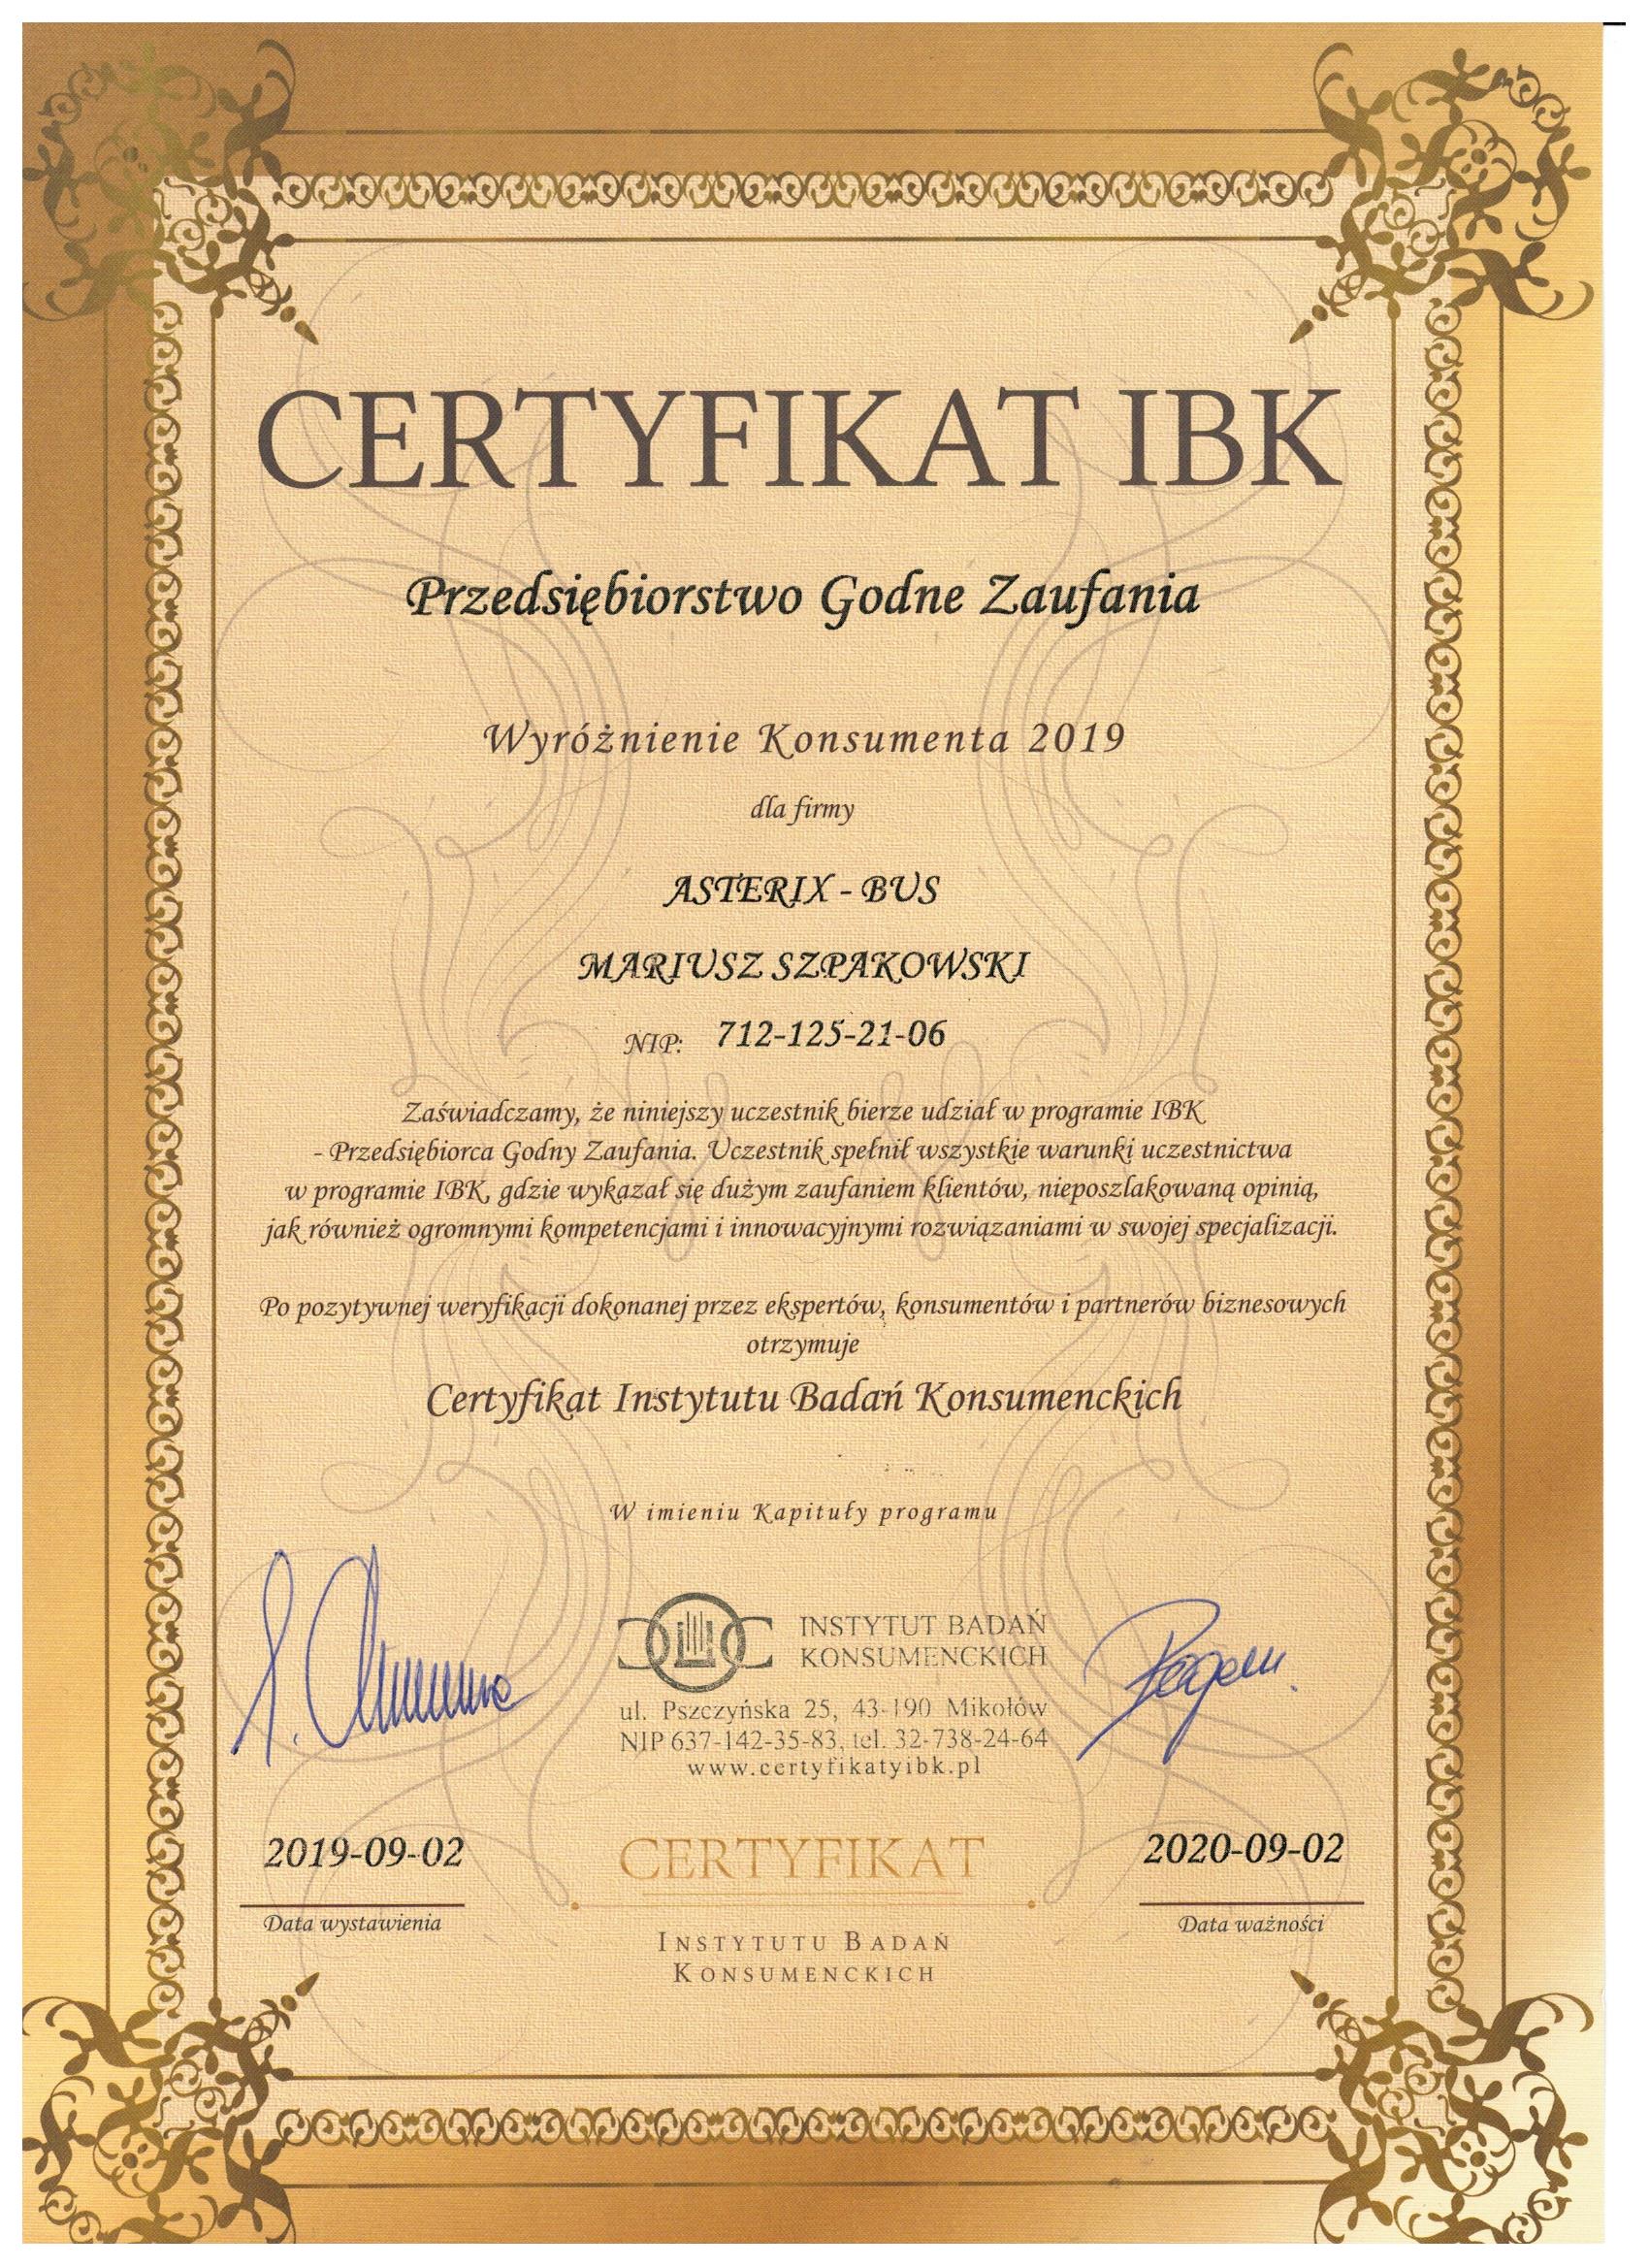 certyfikat ibk 2019 001